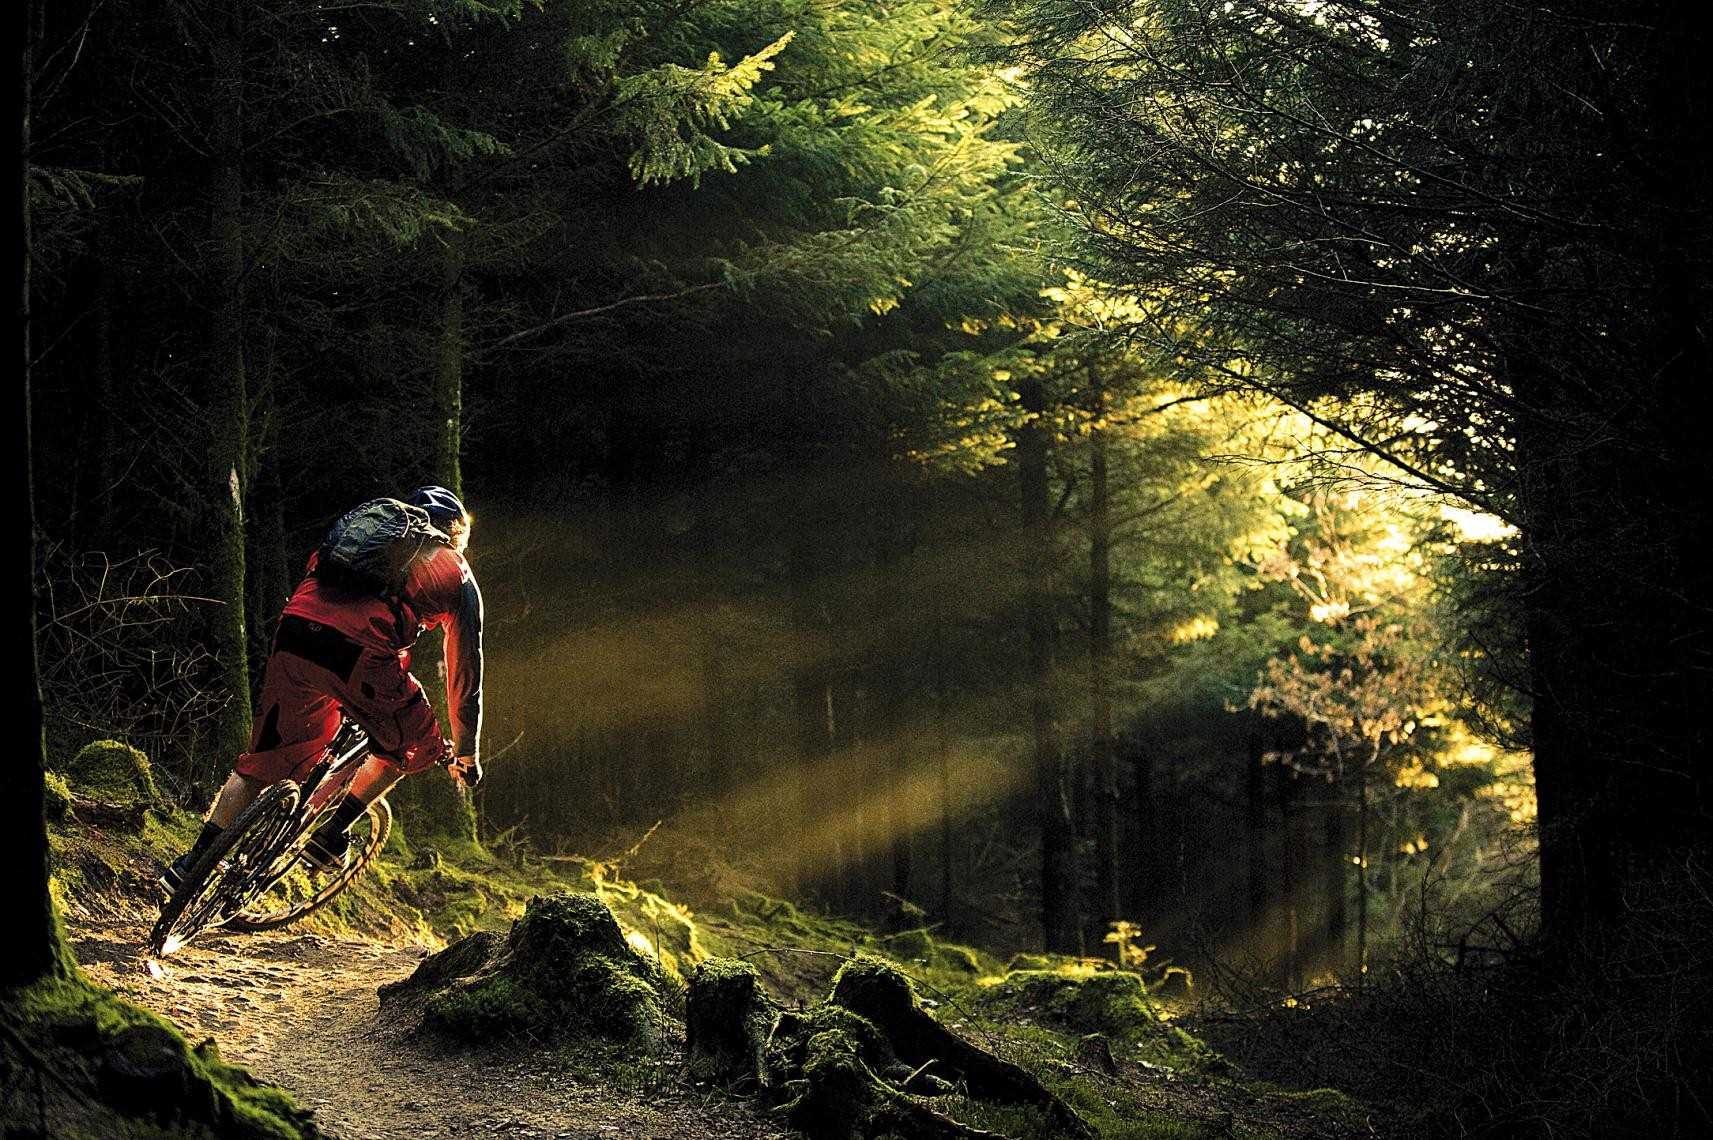 Mountain Bike Desktop Wallpapers - Top Free Mountain Bike Desktop ...